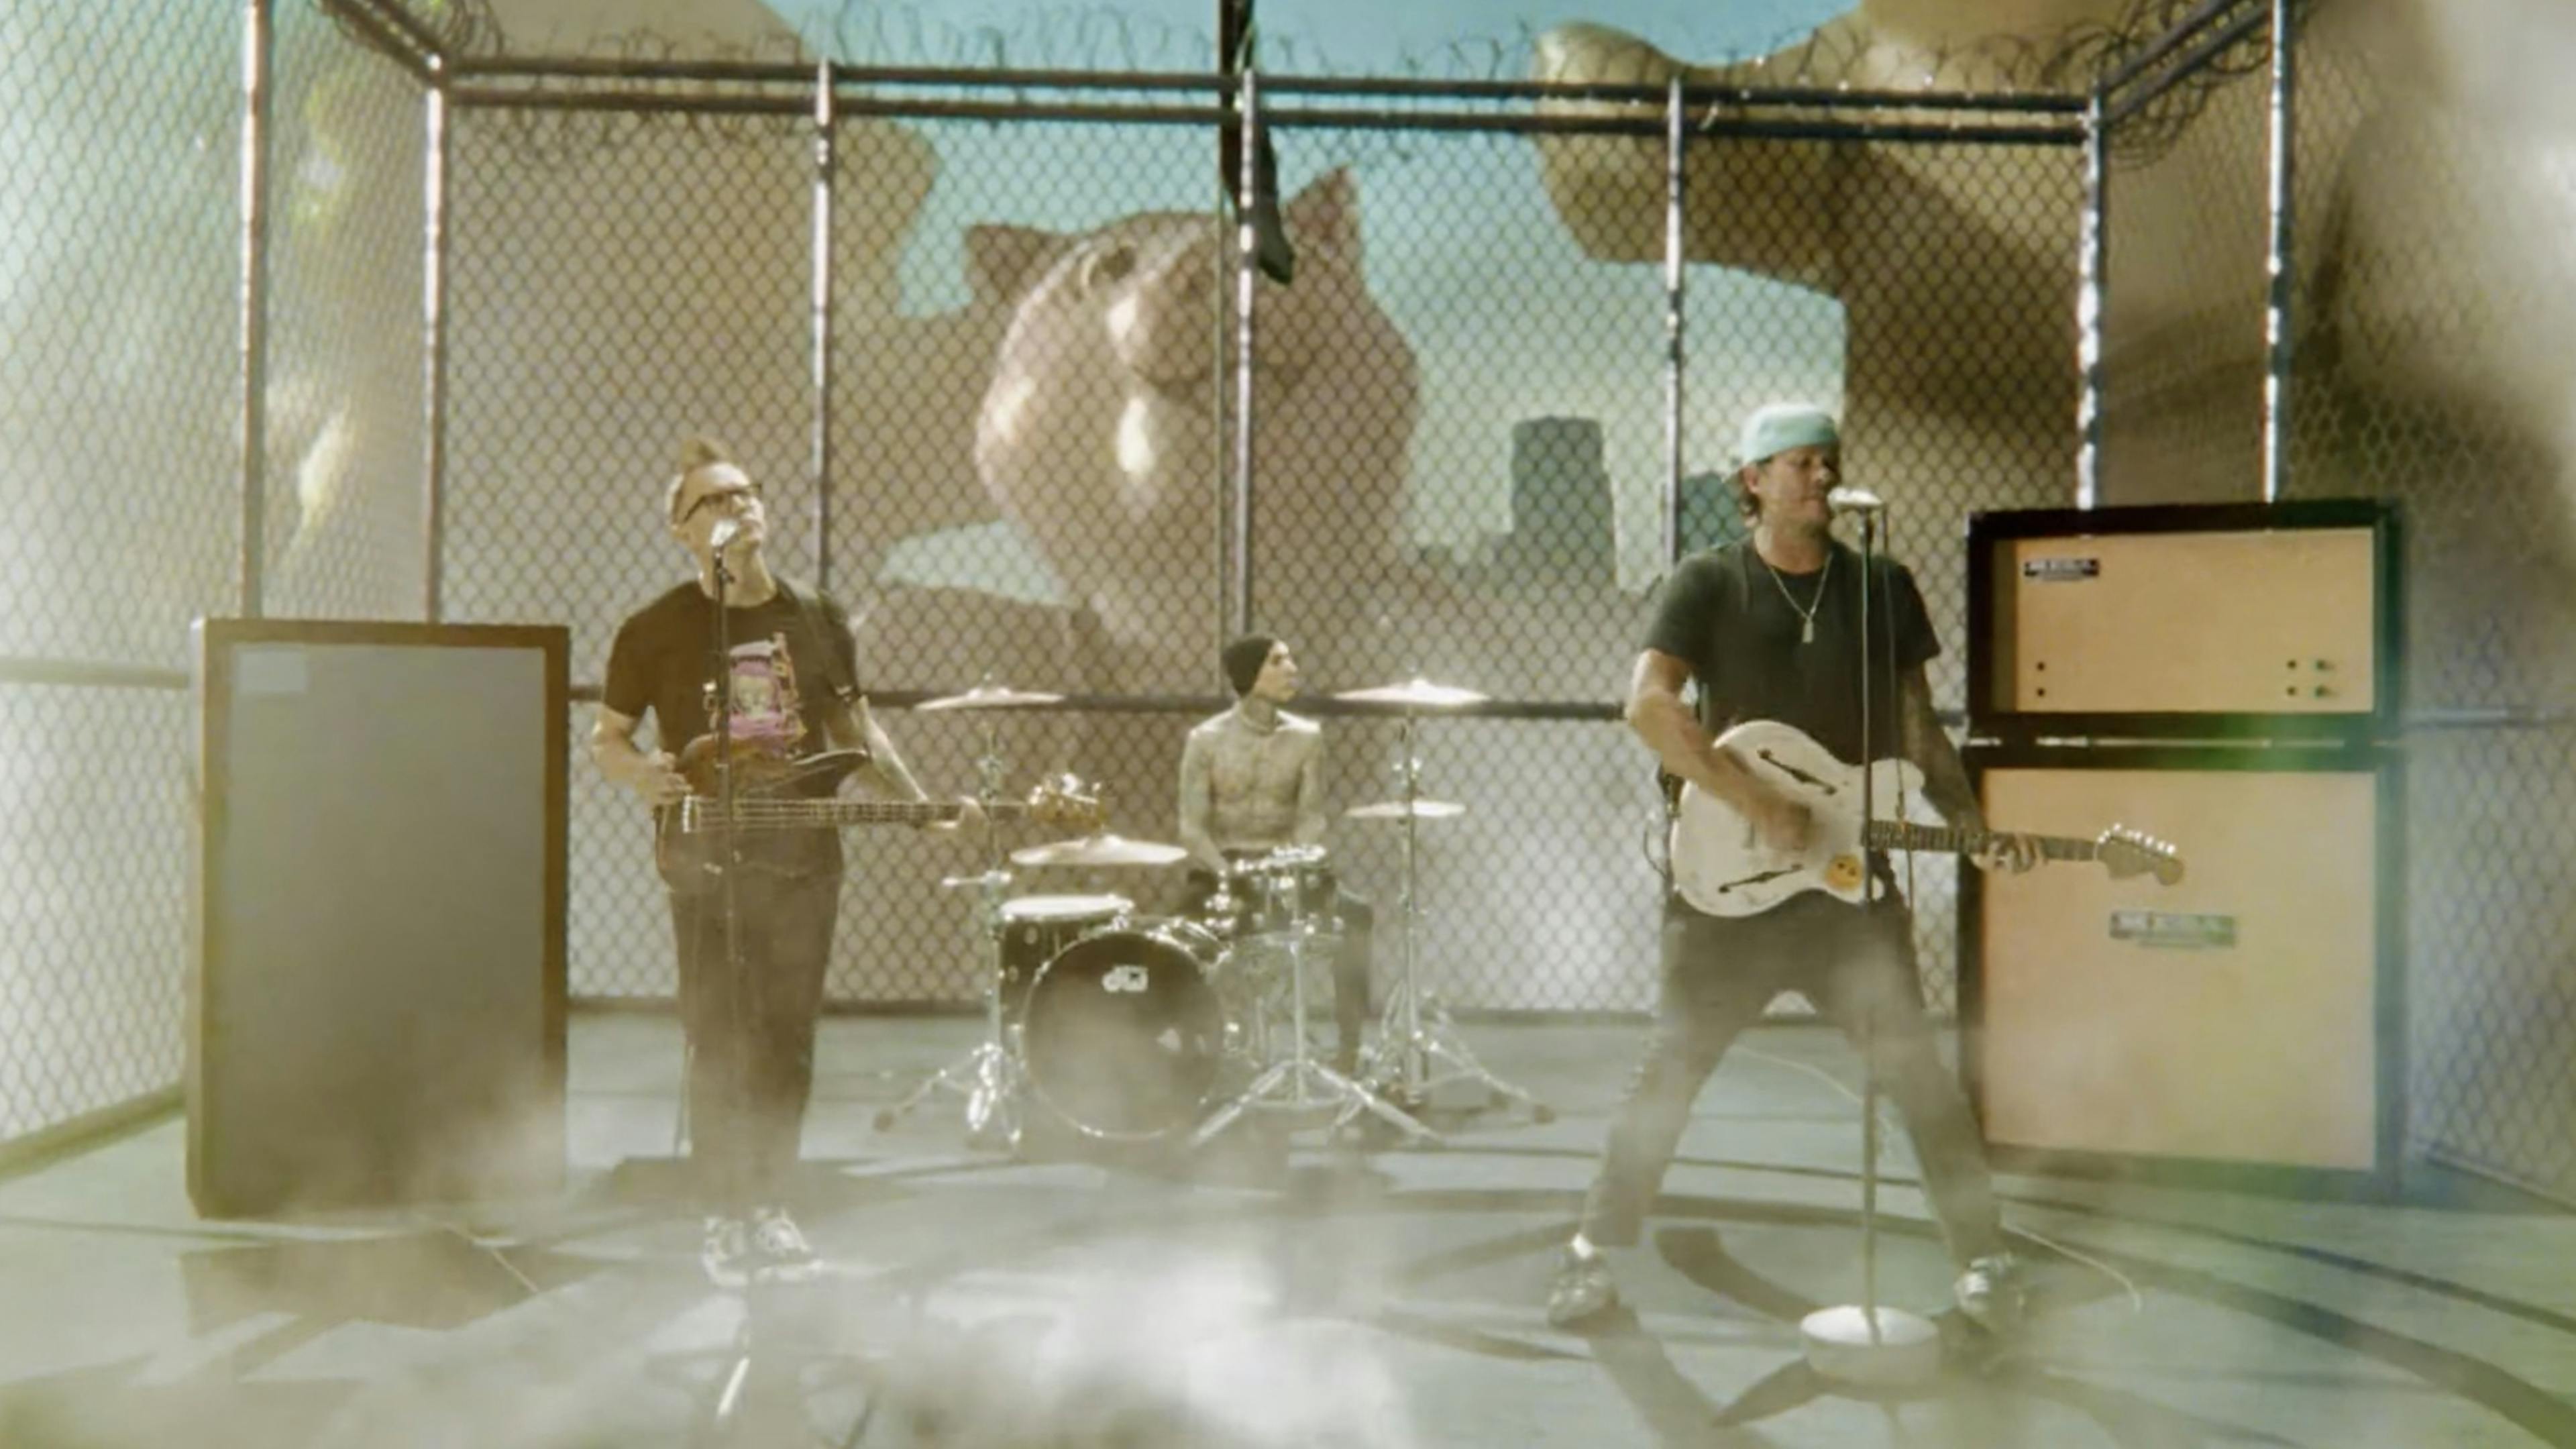 blink-182 drop heartfelt new single and video, ONE MORE… | Kerrang!